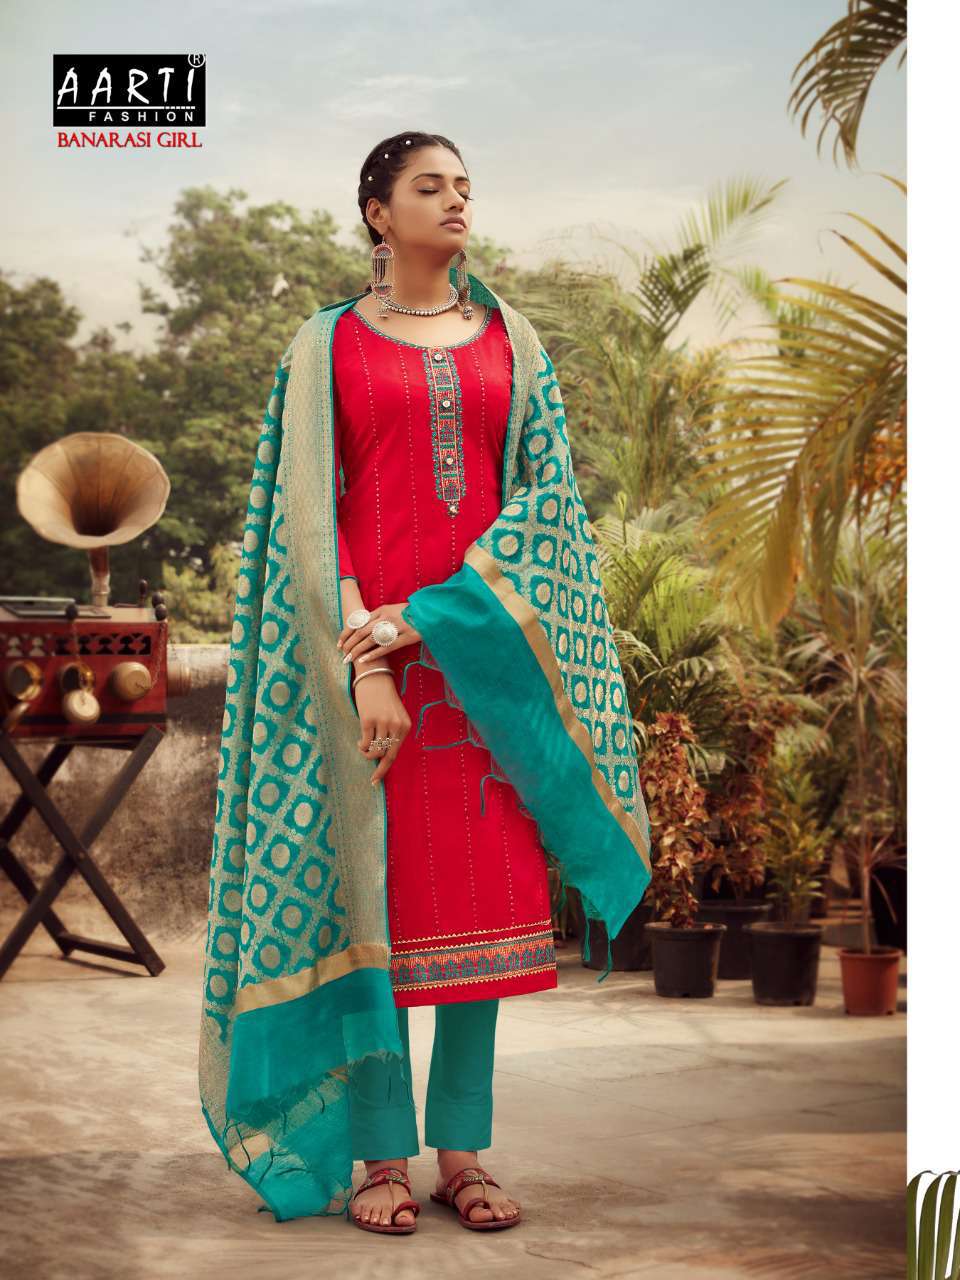 Readymade Street Style Women's Black Shalwar Kameez Salwar suit | eBay